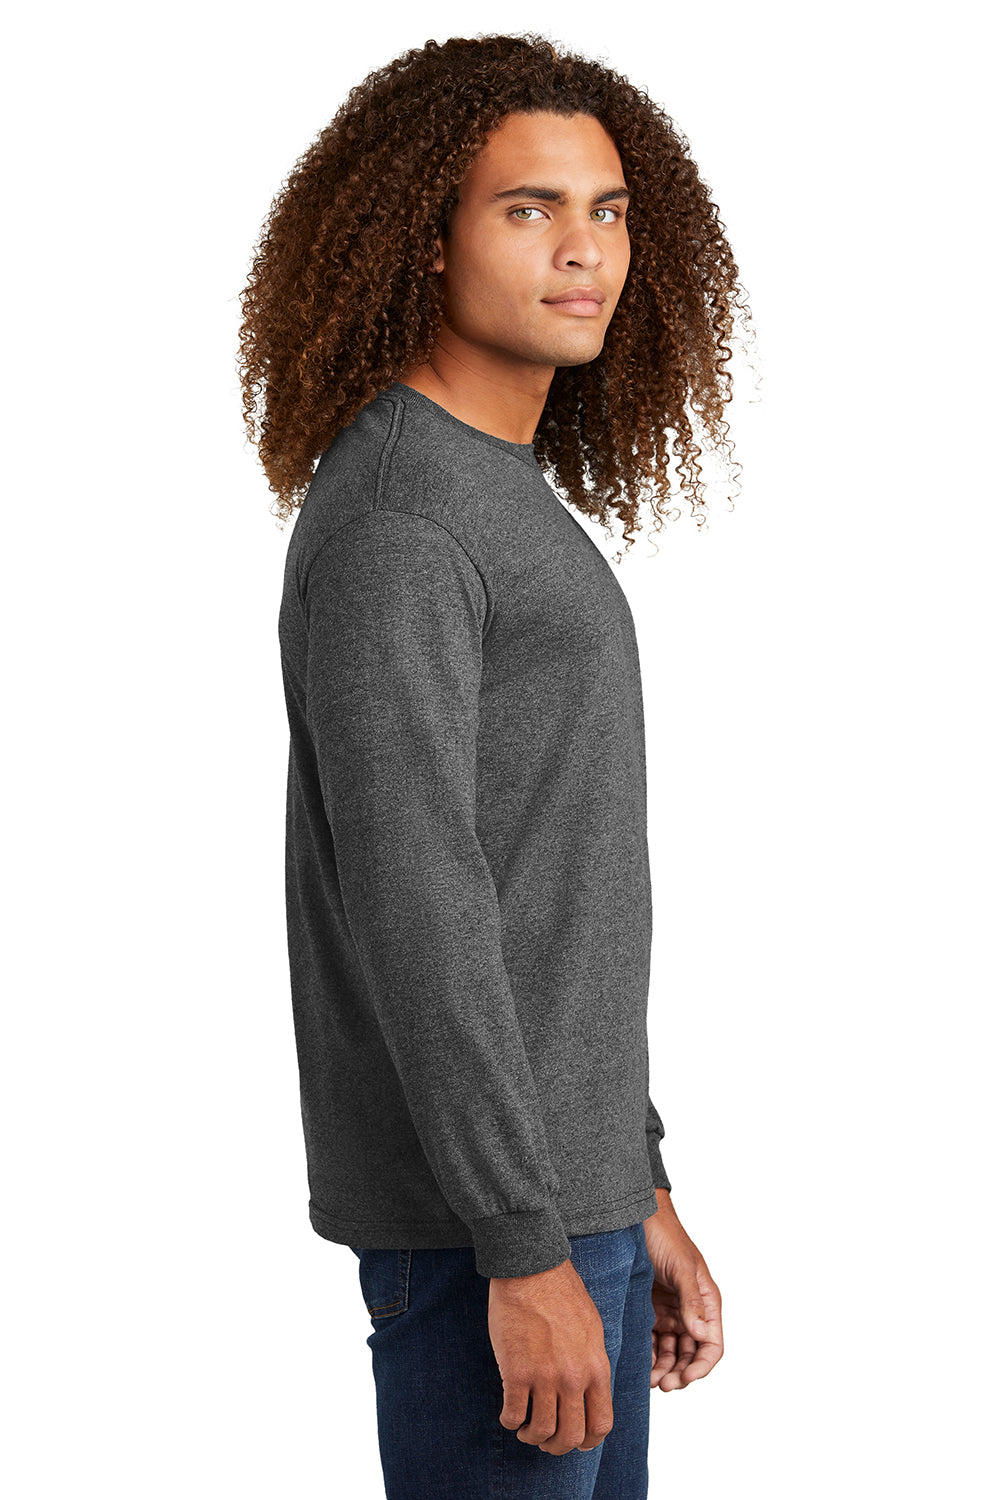 American Apparel AL1304/1304 Mens Long Sleeve Crewneck T-Shirt Heather Charcoal Grey Model Side